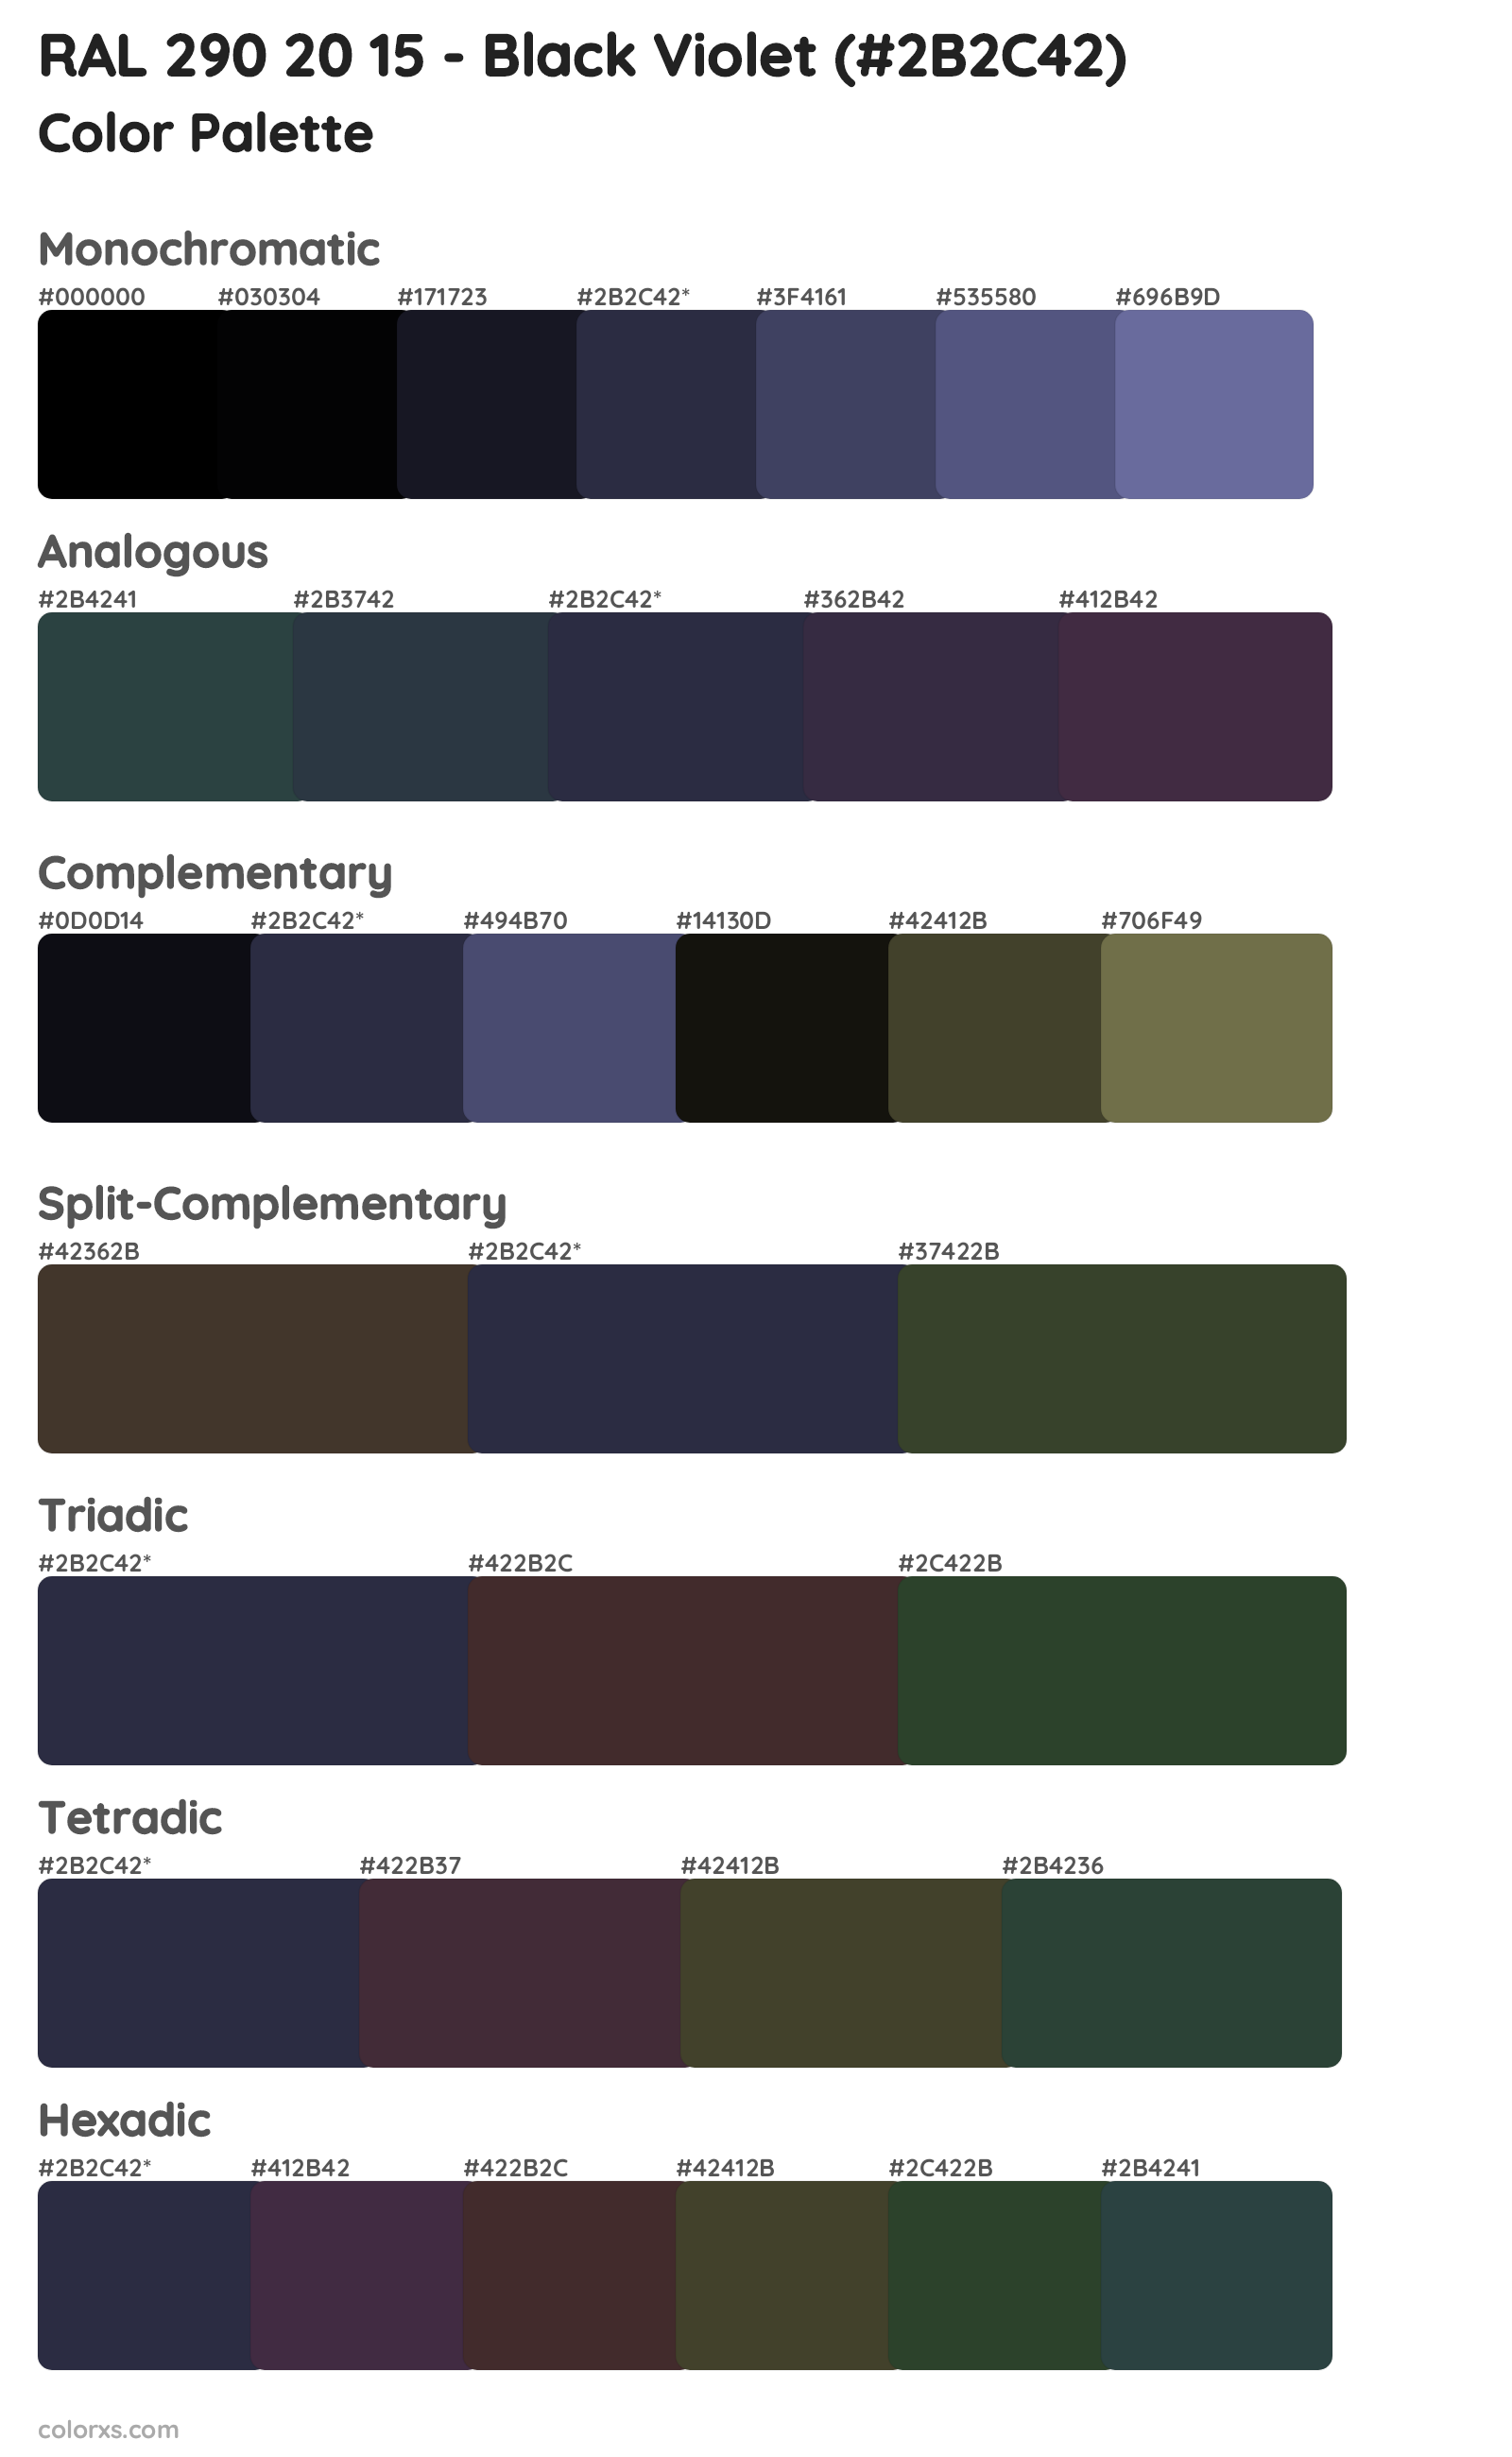 RAL 290 20 15 - Black Violet Color Scheme Palettes